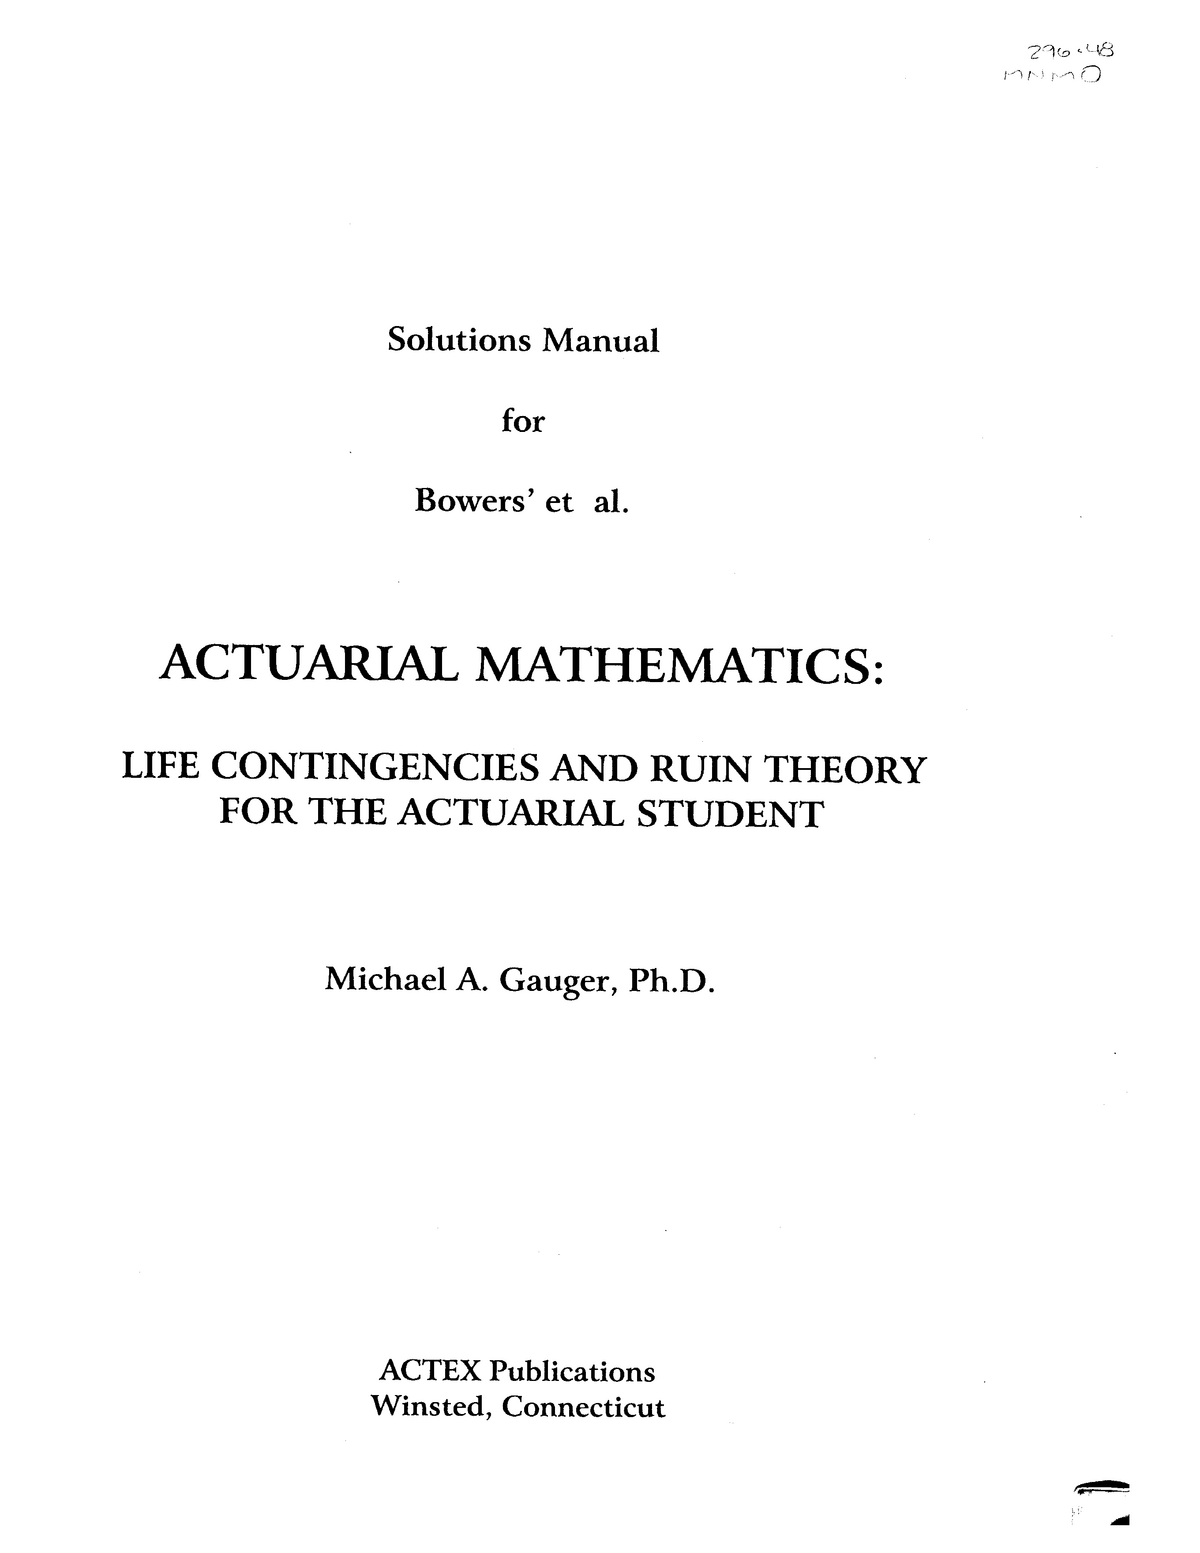 actuarial mathematics bowers pdf download